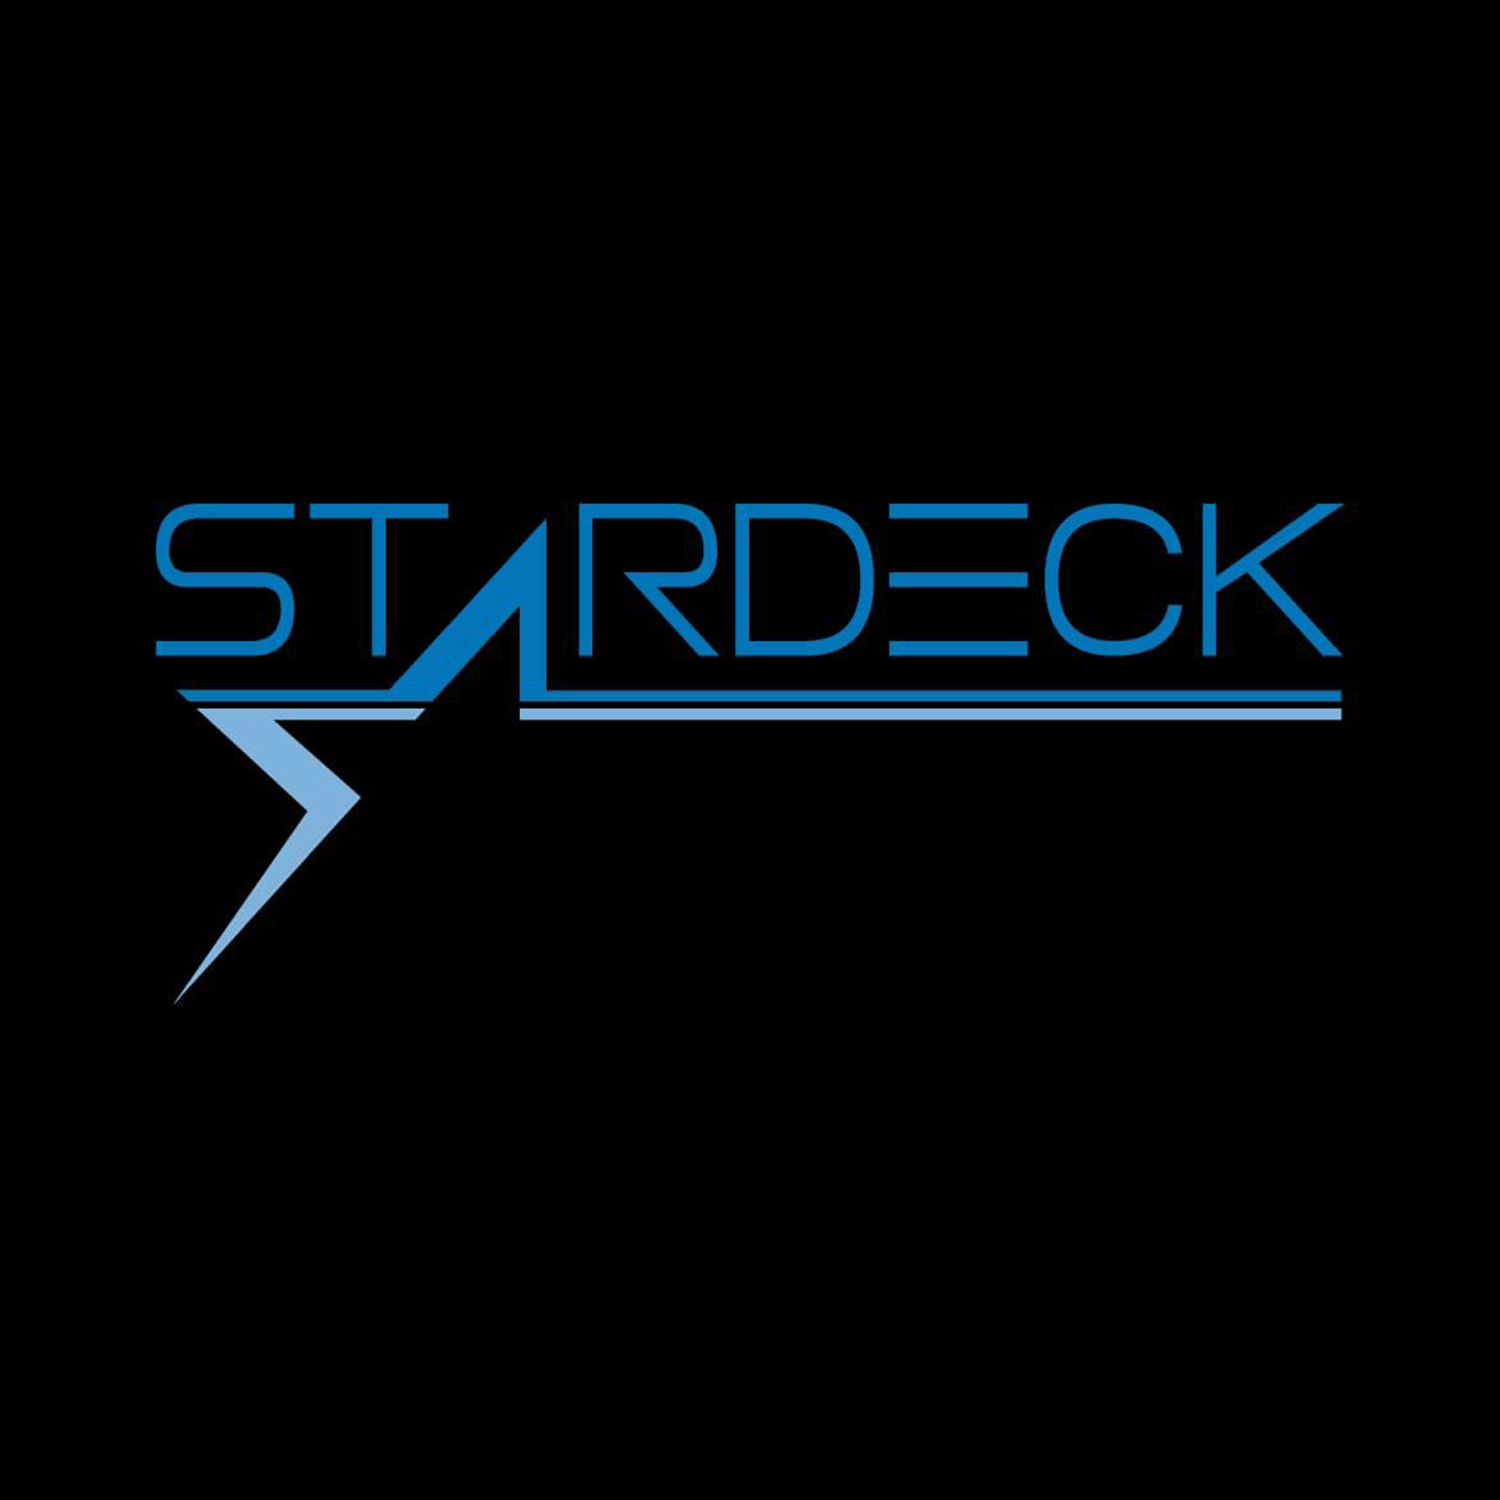 The StarDeck